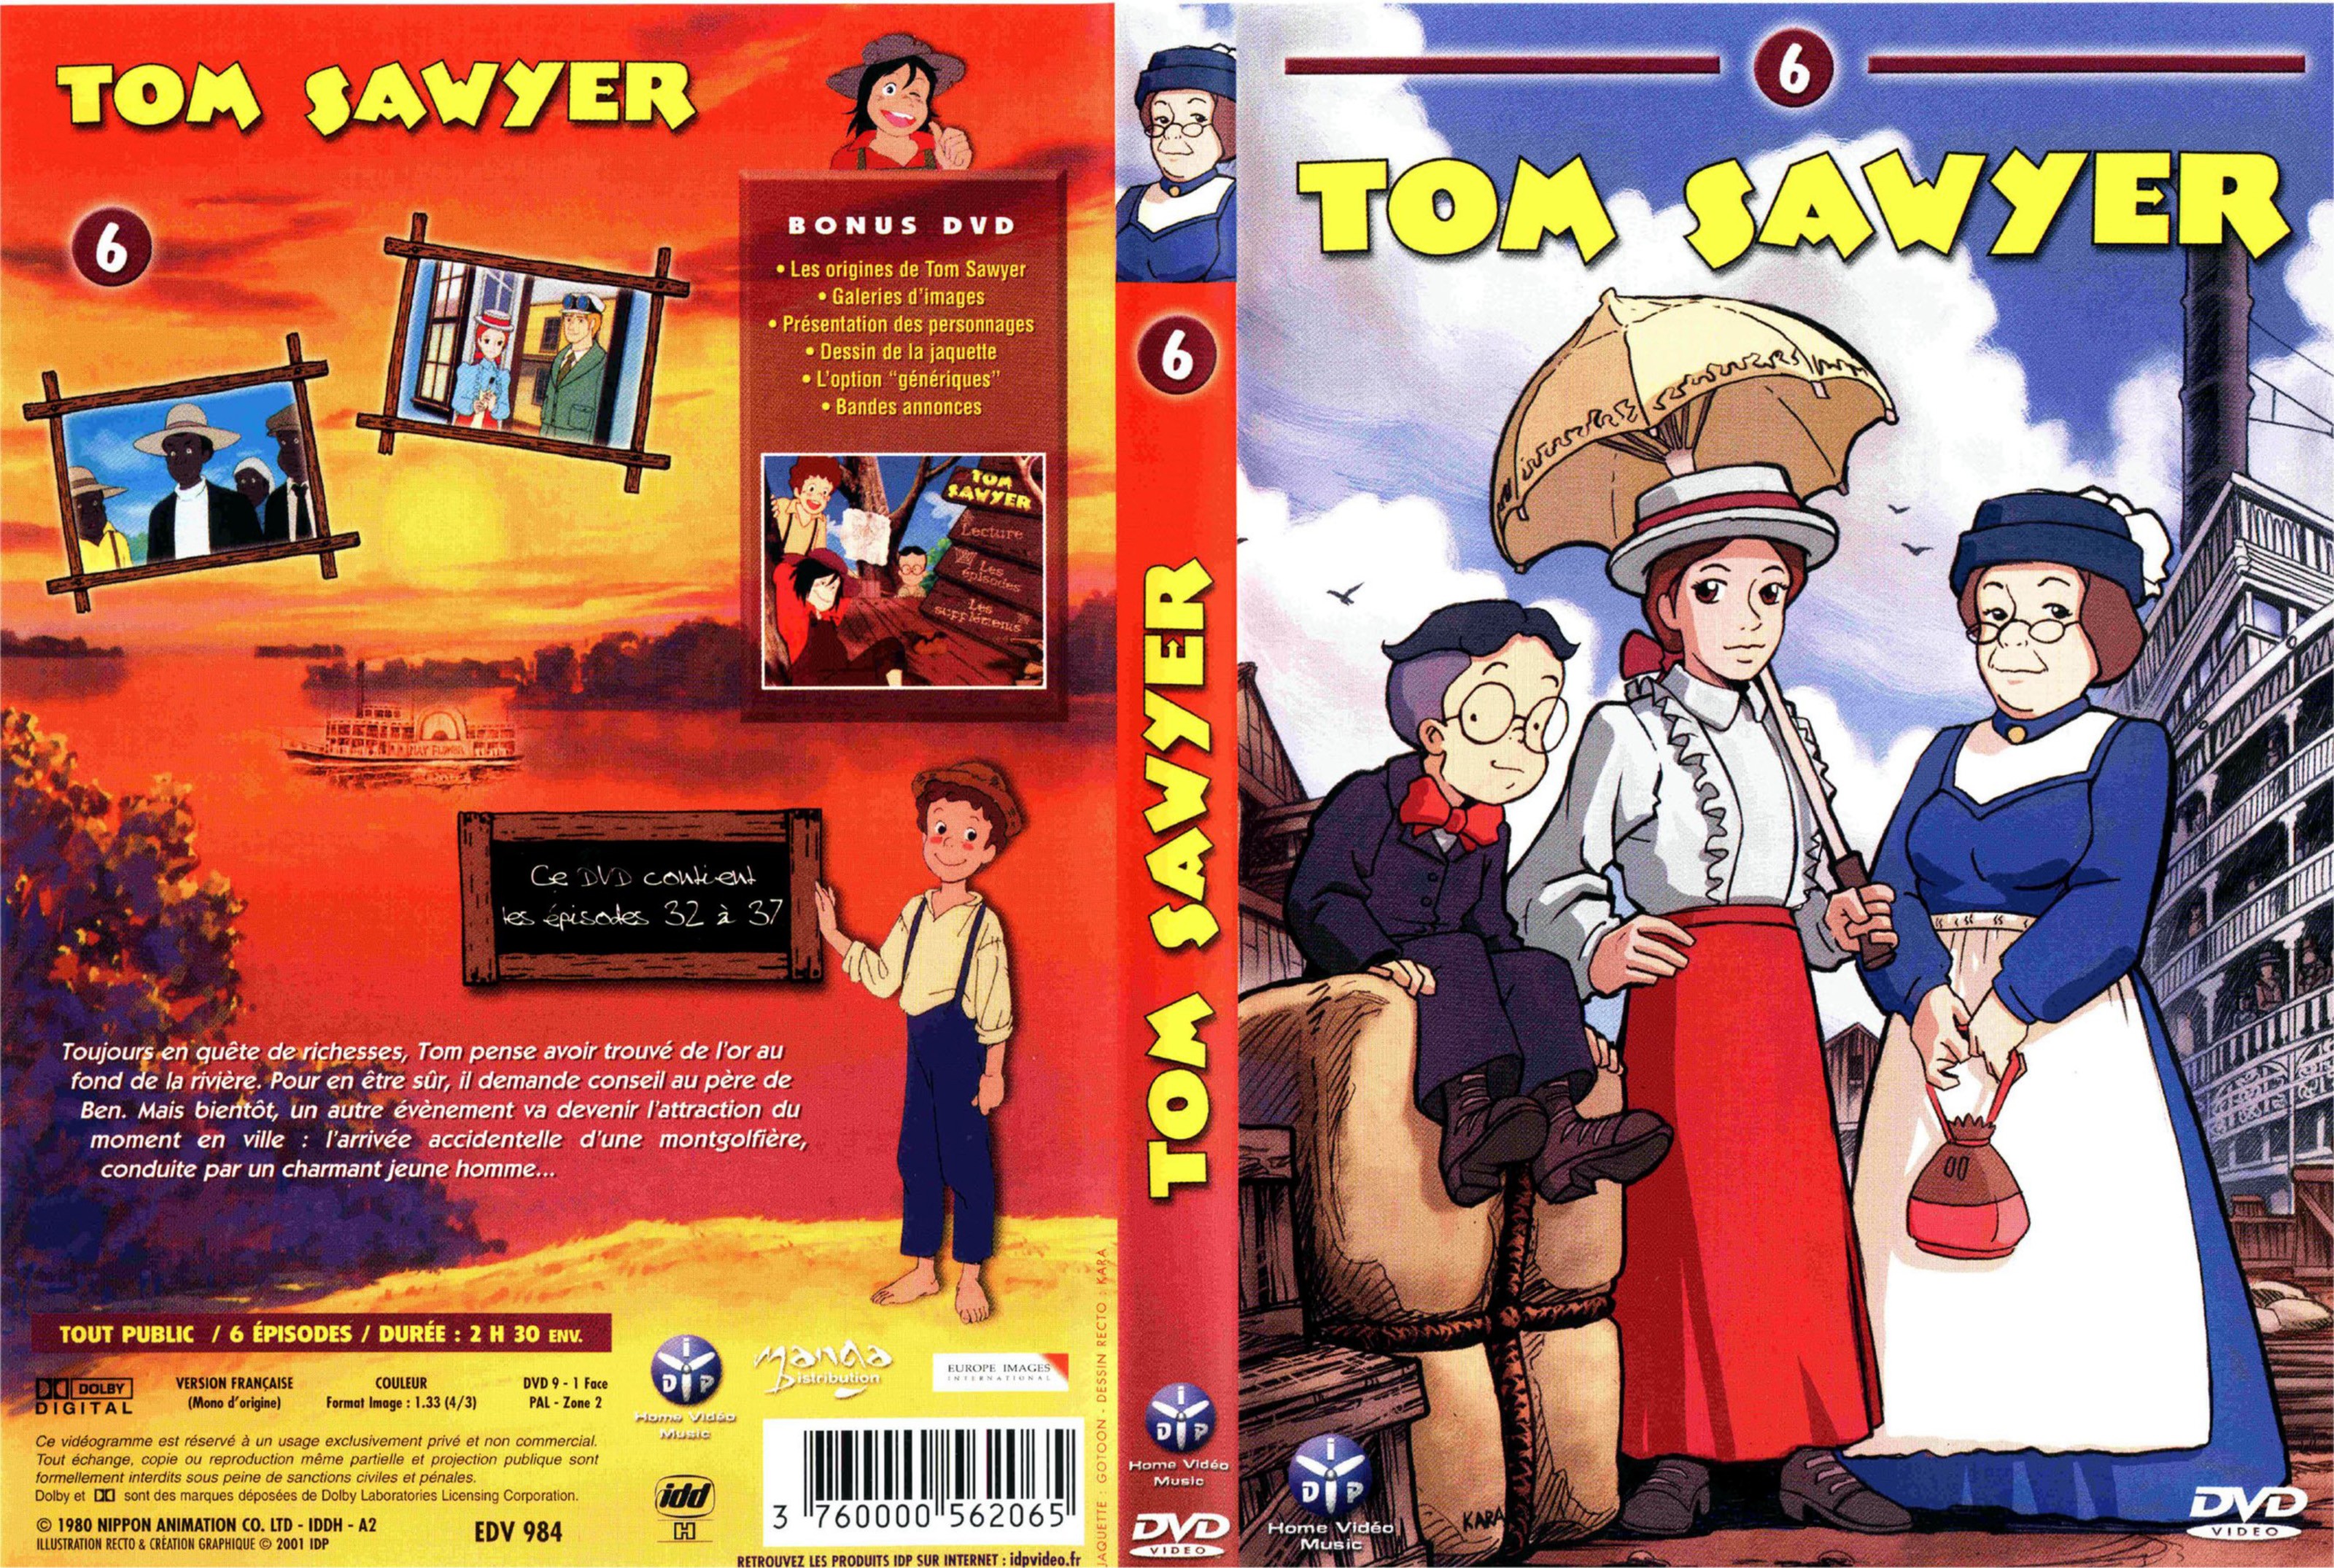 Jaquette DVD Tom Sawyer vol 6